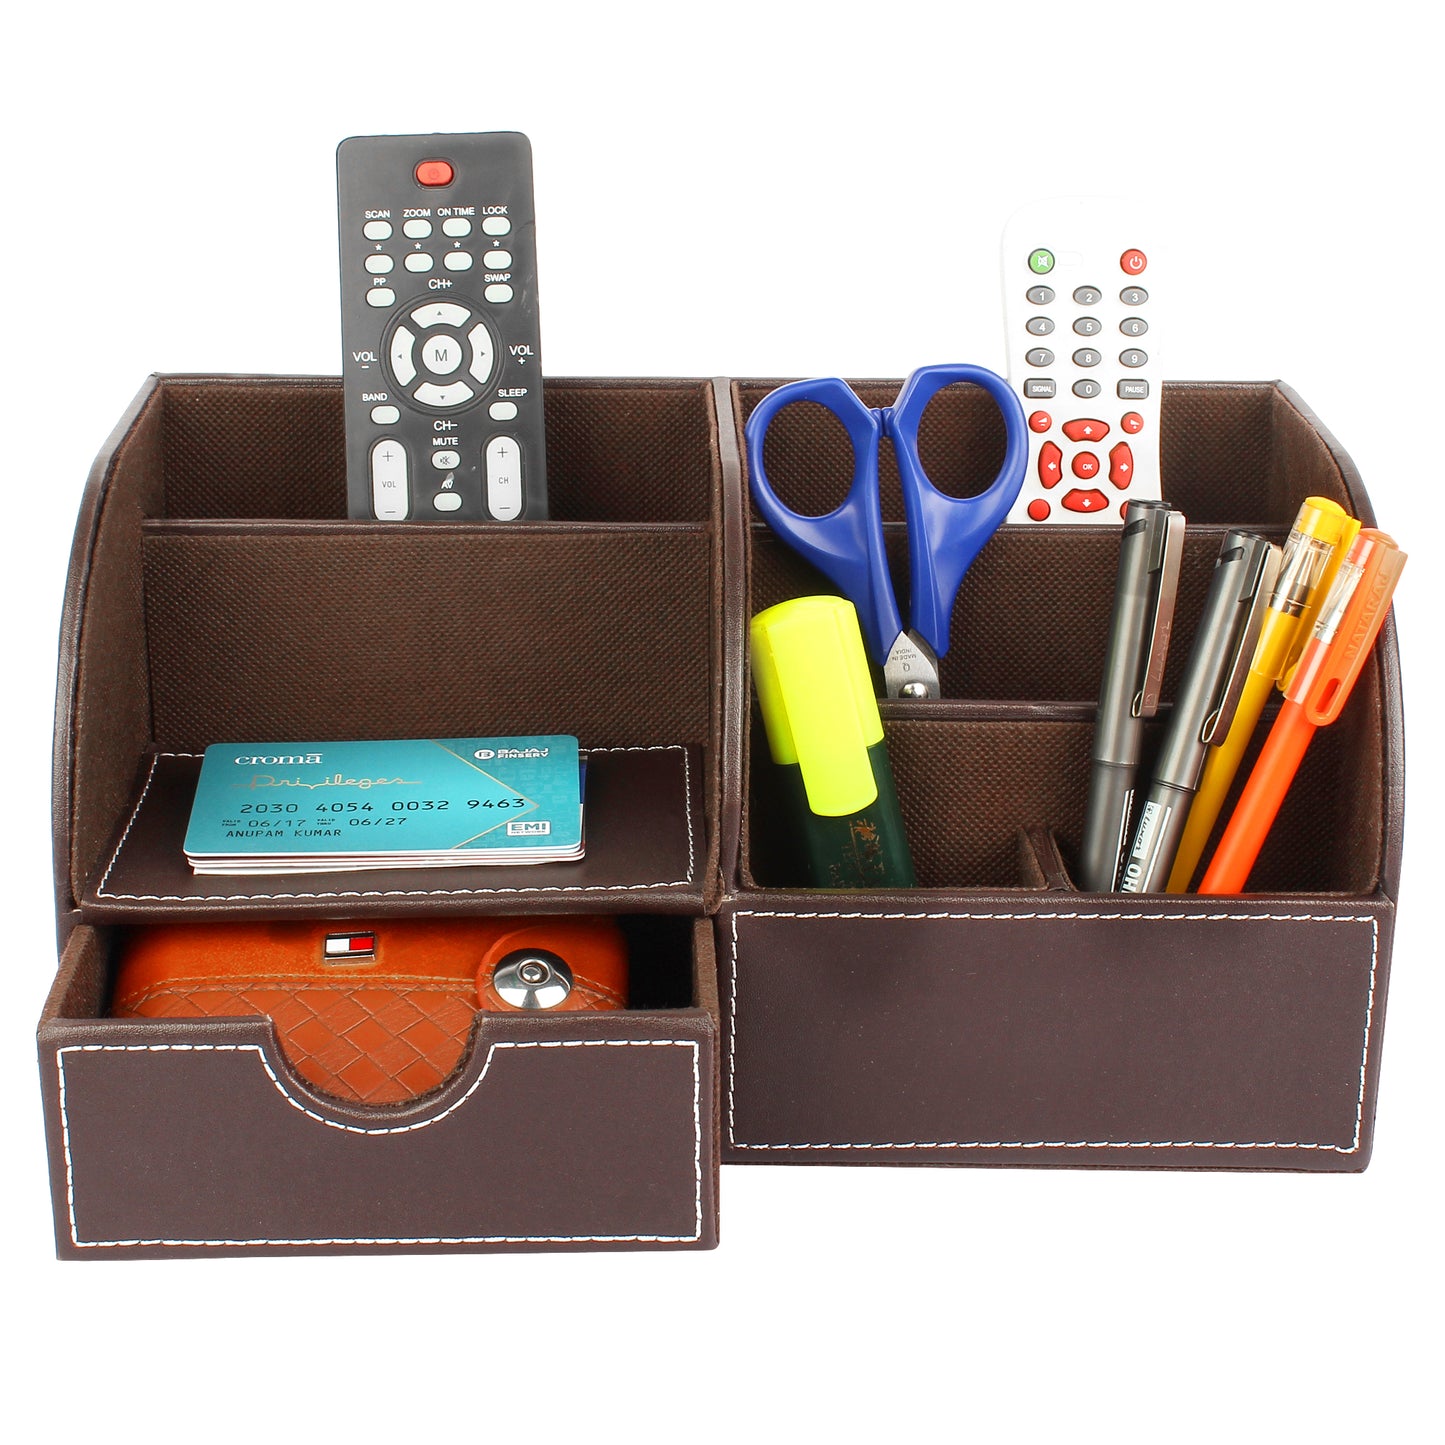 Desk Organizer with 6 compartments